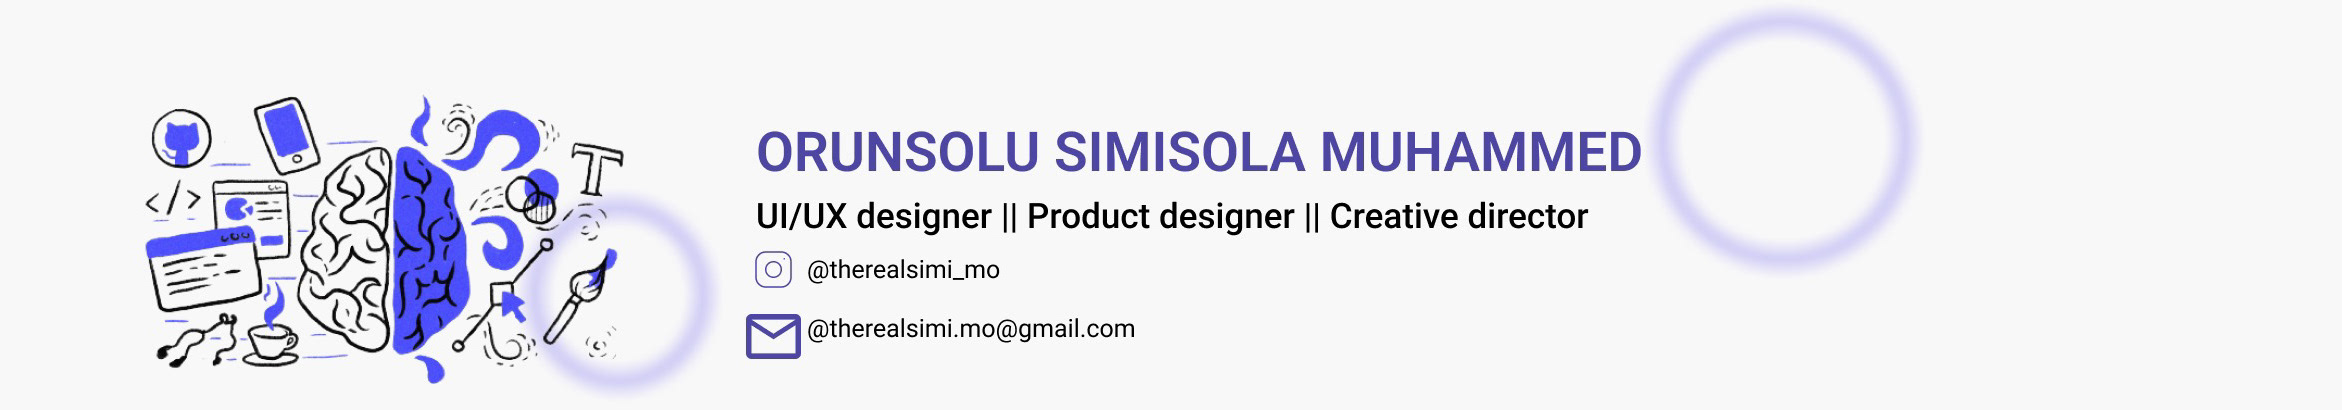 Orunsolu Simisola's profile banner